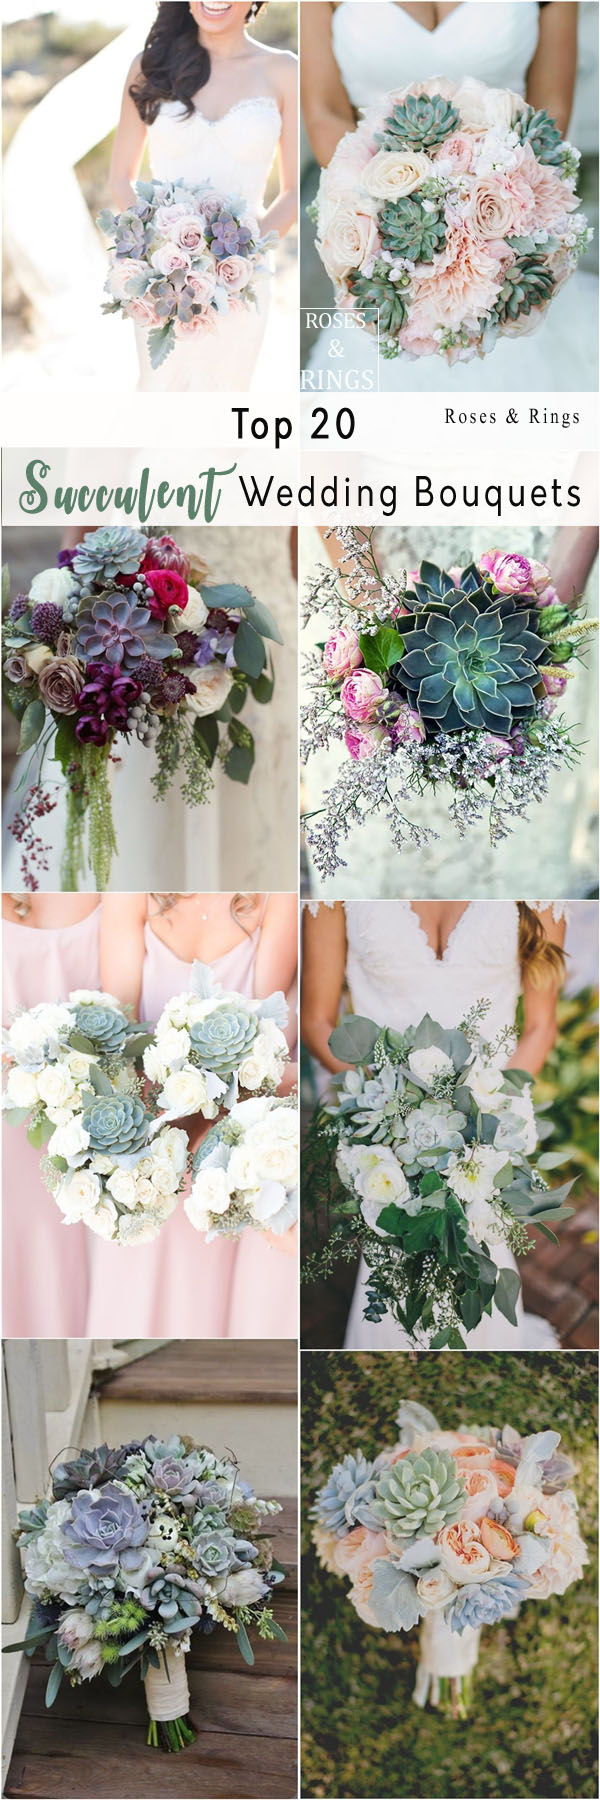 rustic wedding bouquet featuring succulents